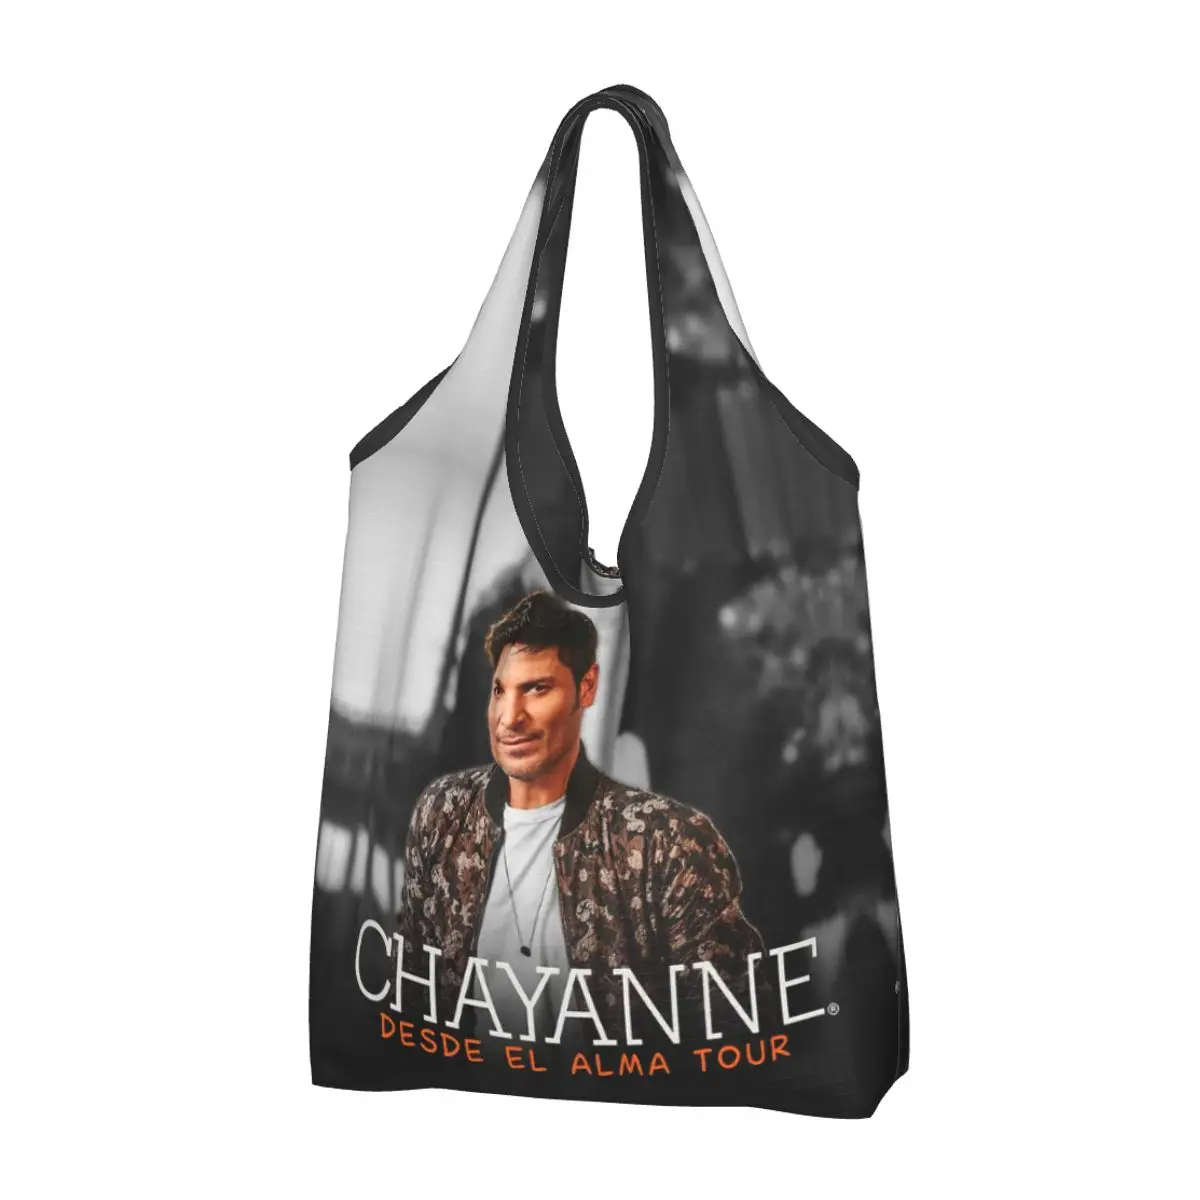 

Bopakal Chayanne Desde El Alma Tour 2019 Groceries Shopping Bag Fashion Shopper Shoulder Tote Bag Big Capacity Portable Handbag